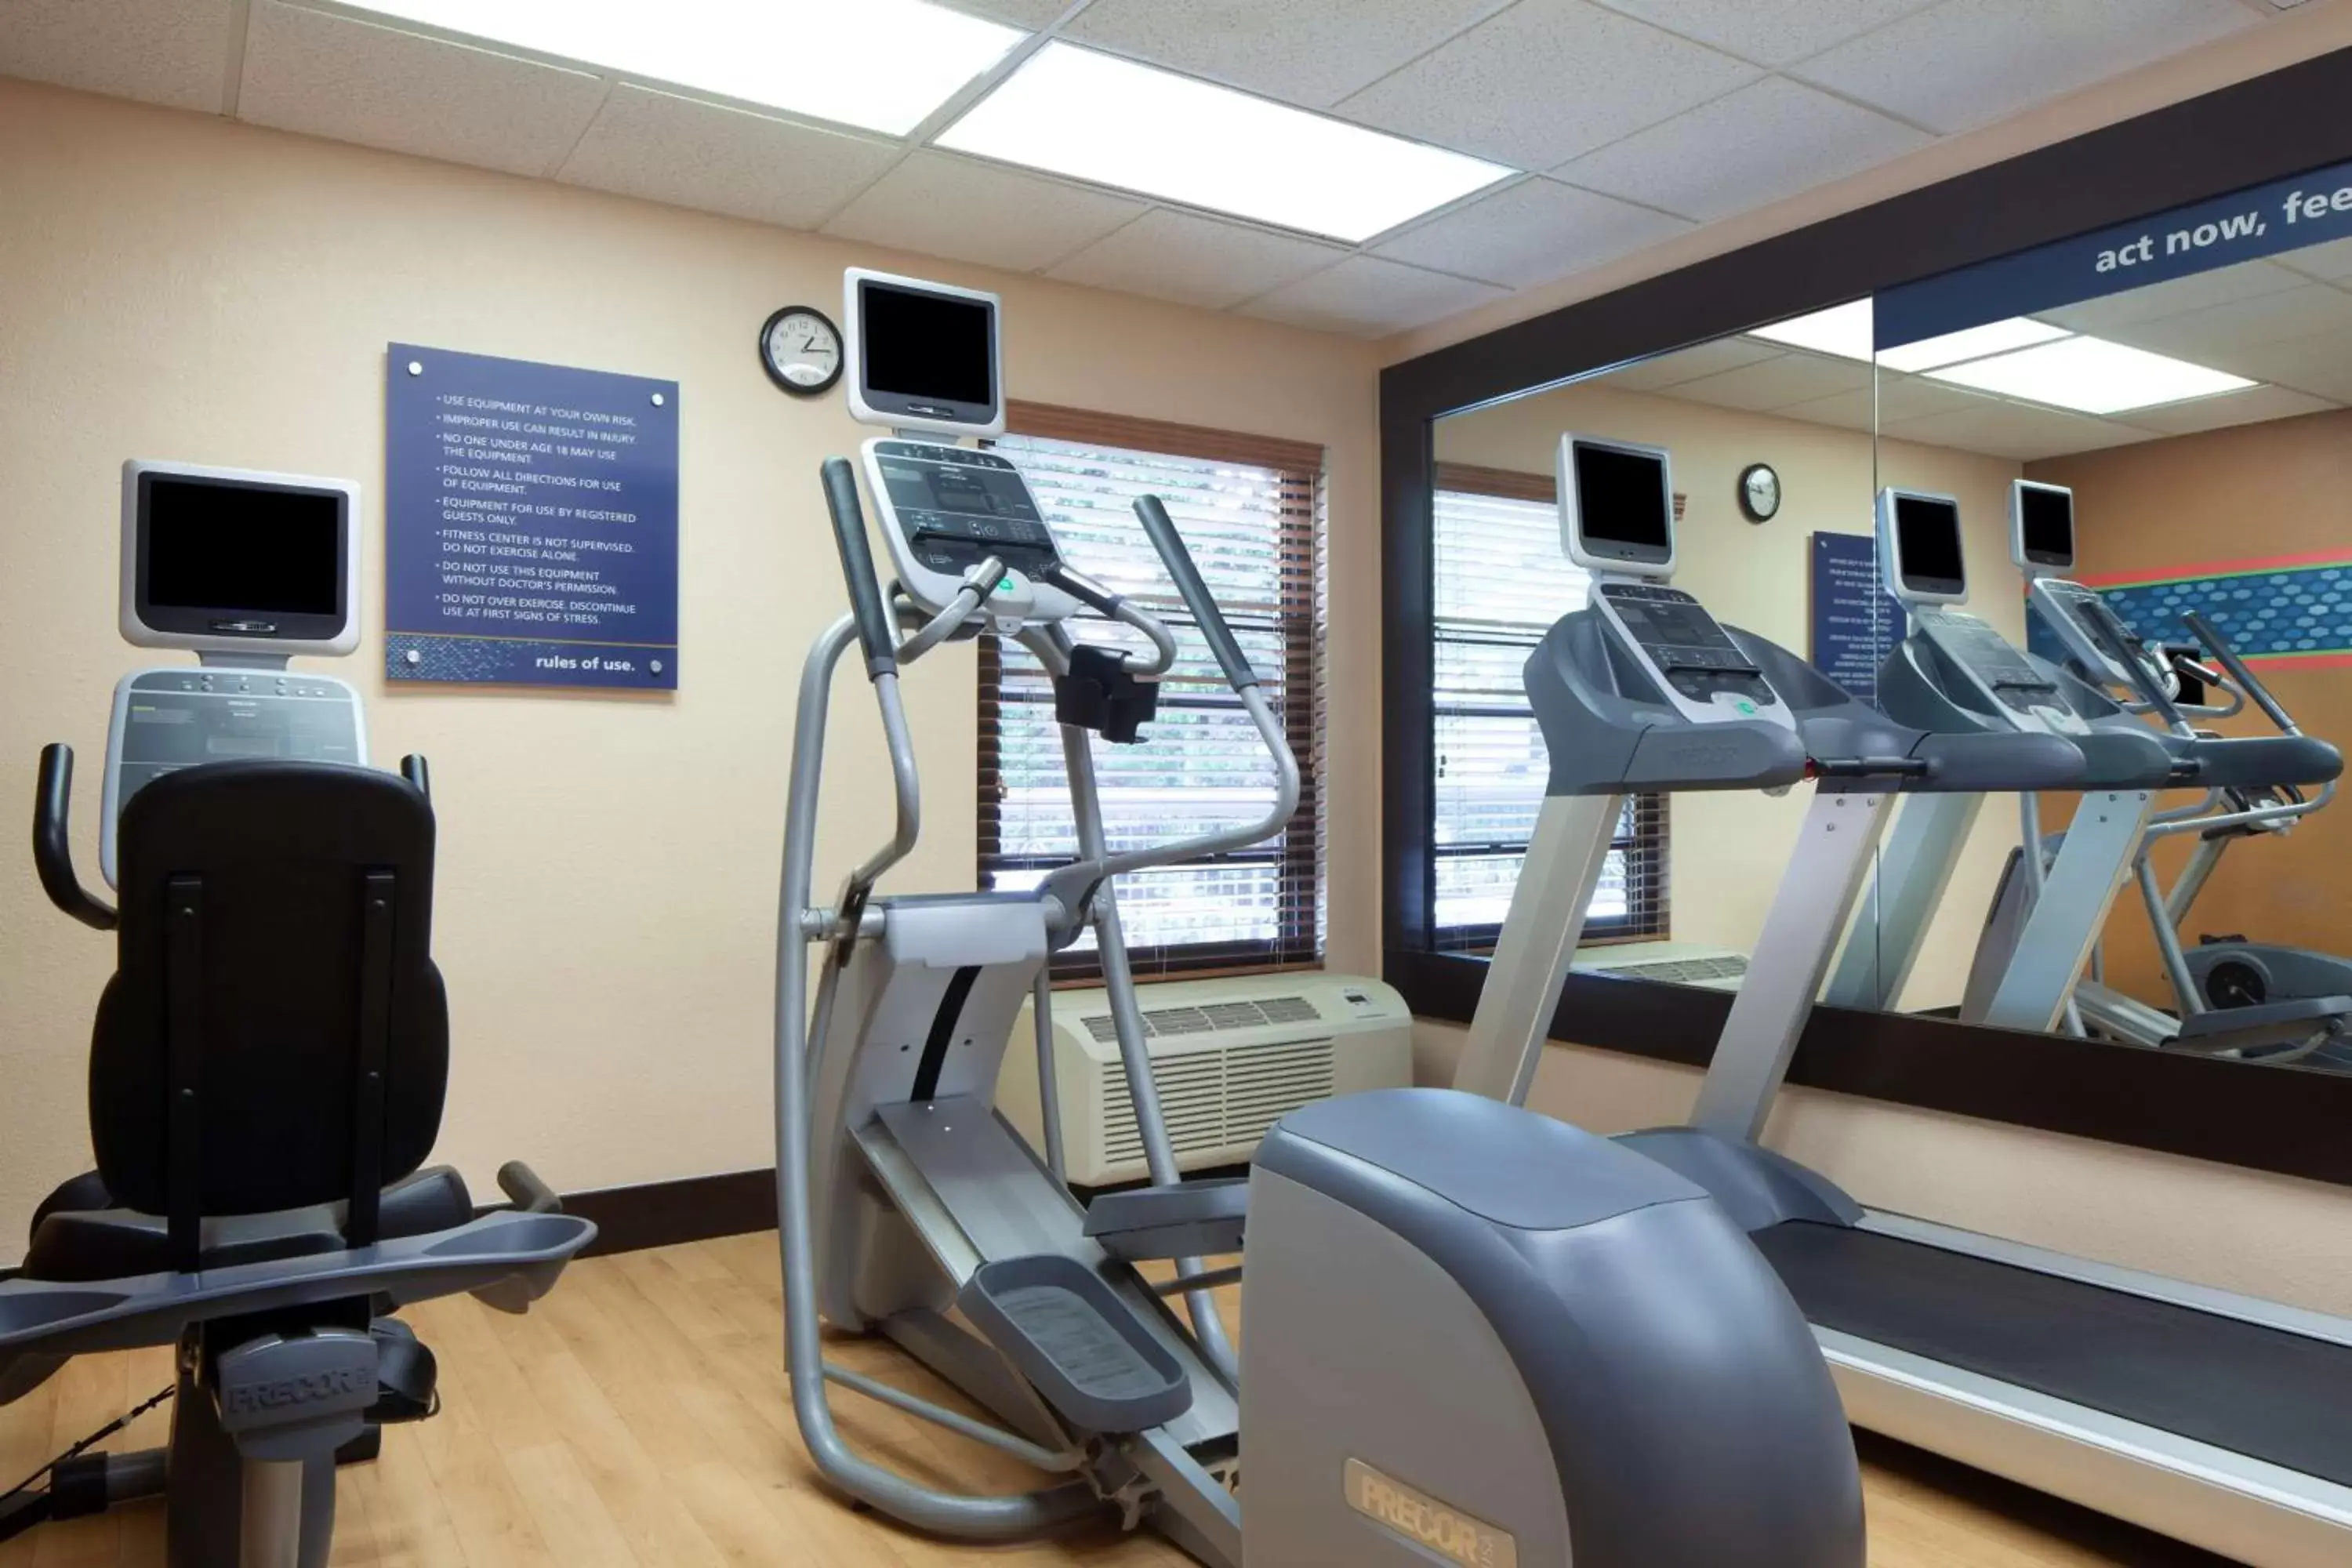 Fitness centre/facilities, Fitness Center/Facilities in Hampton Inn Lawrenceville